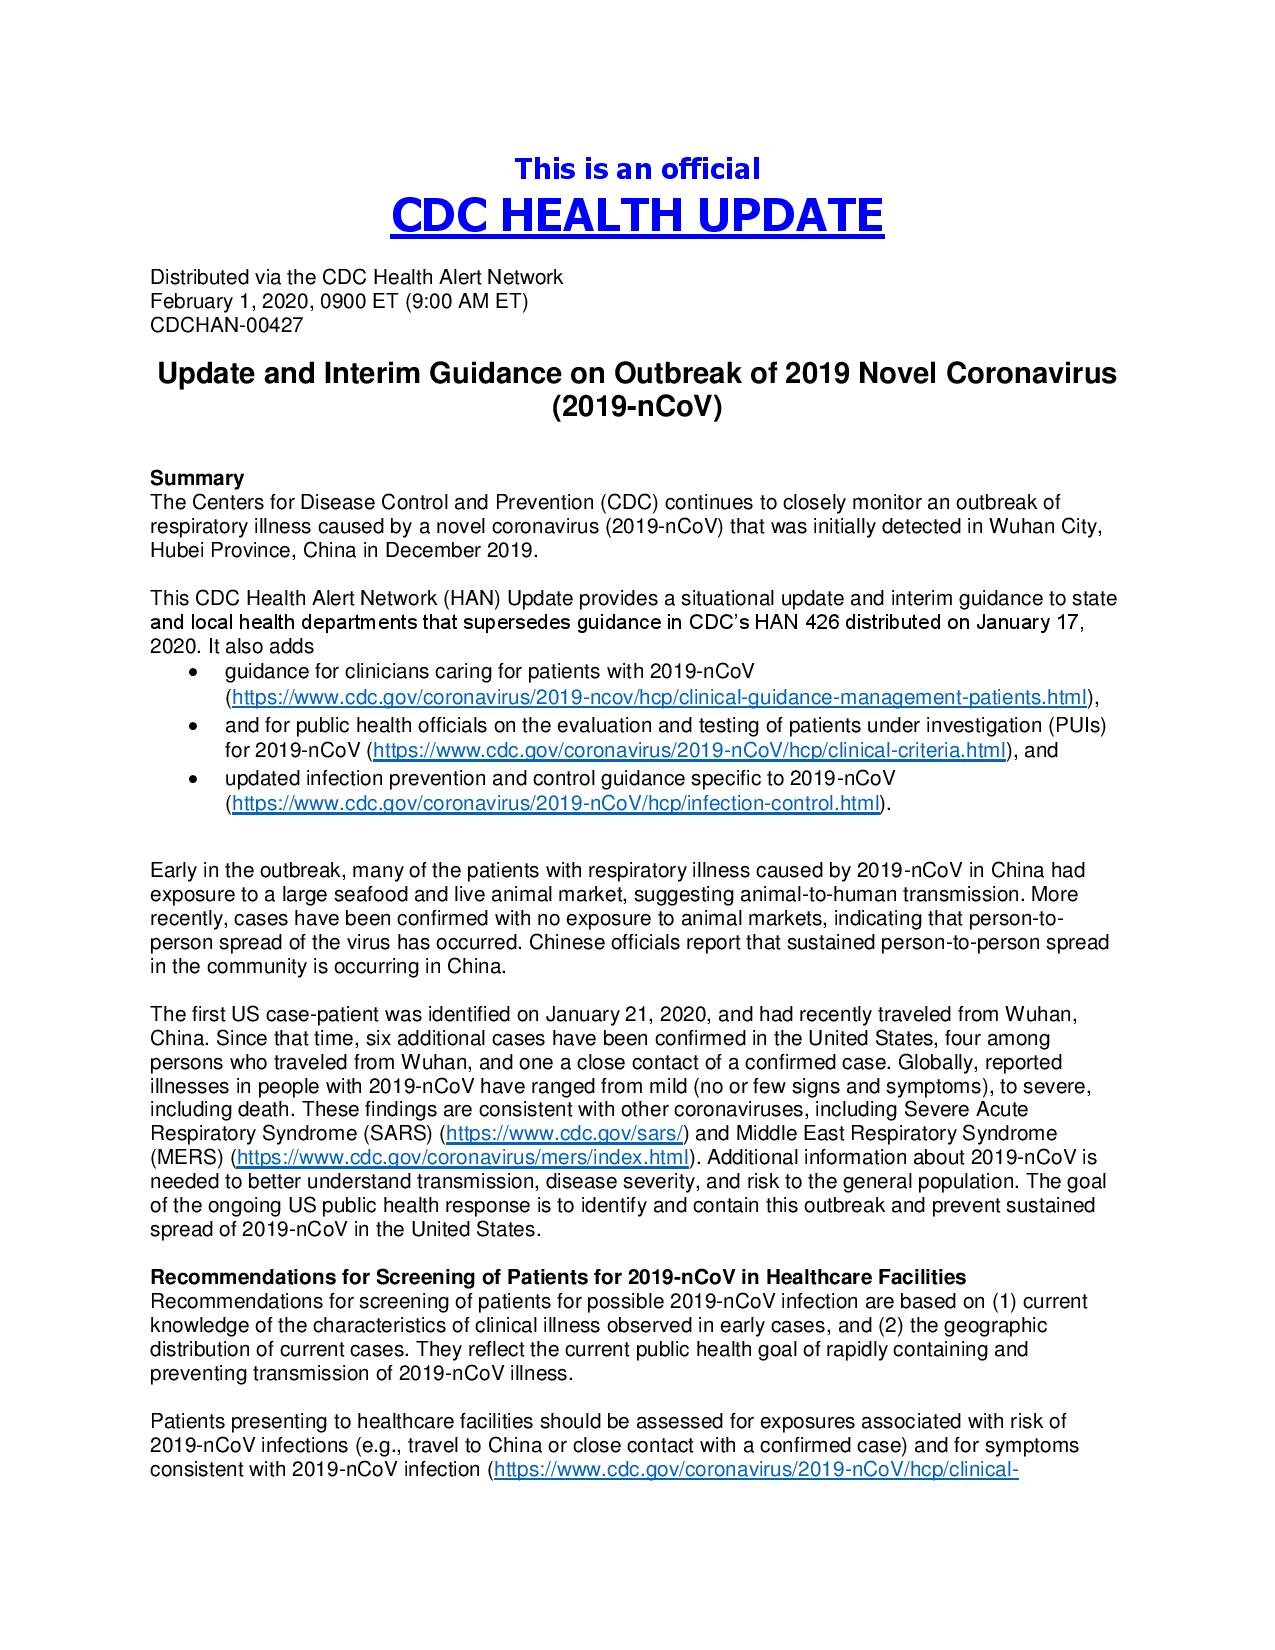 CDC HAN 427 Update 2019-nCoV 02 01 2020-page-001.jpg